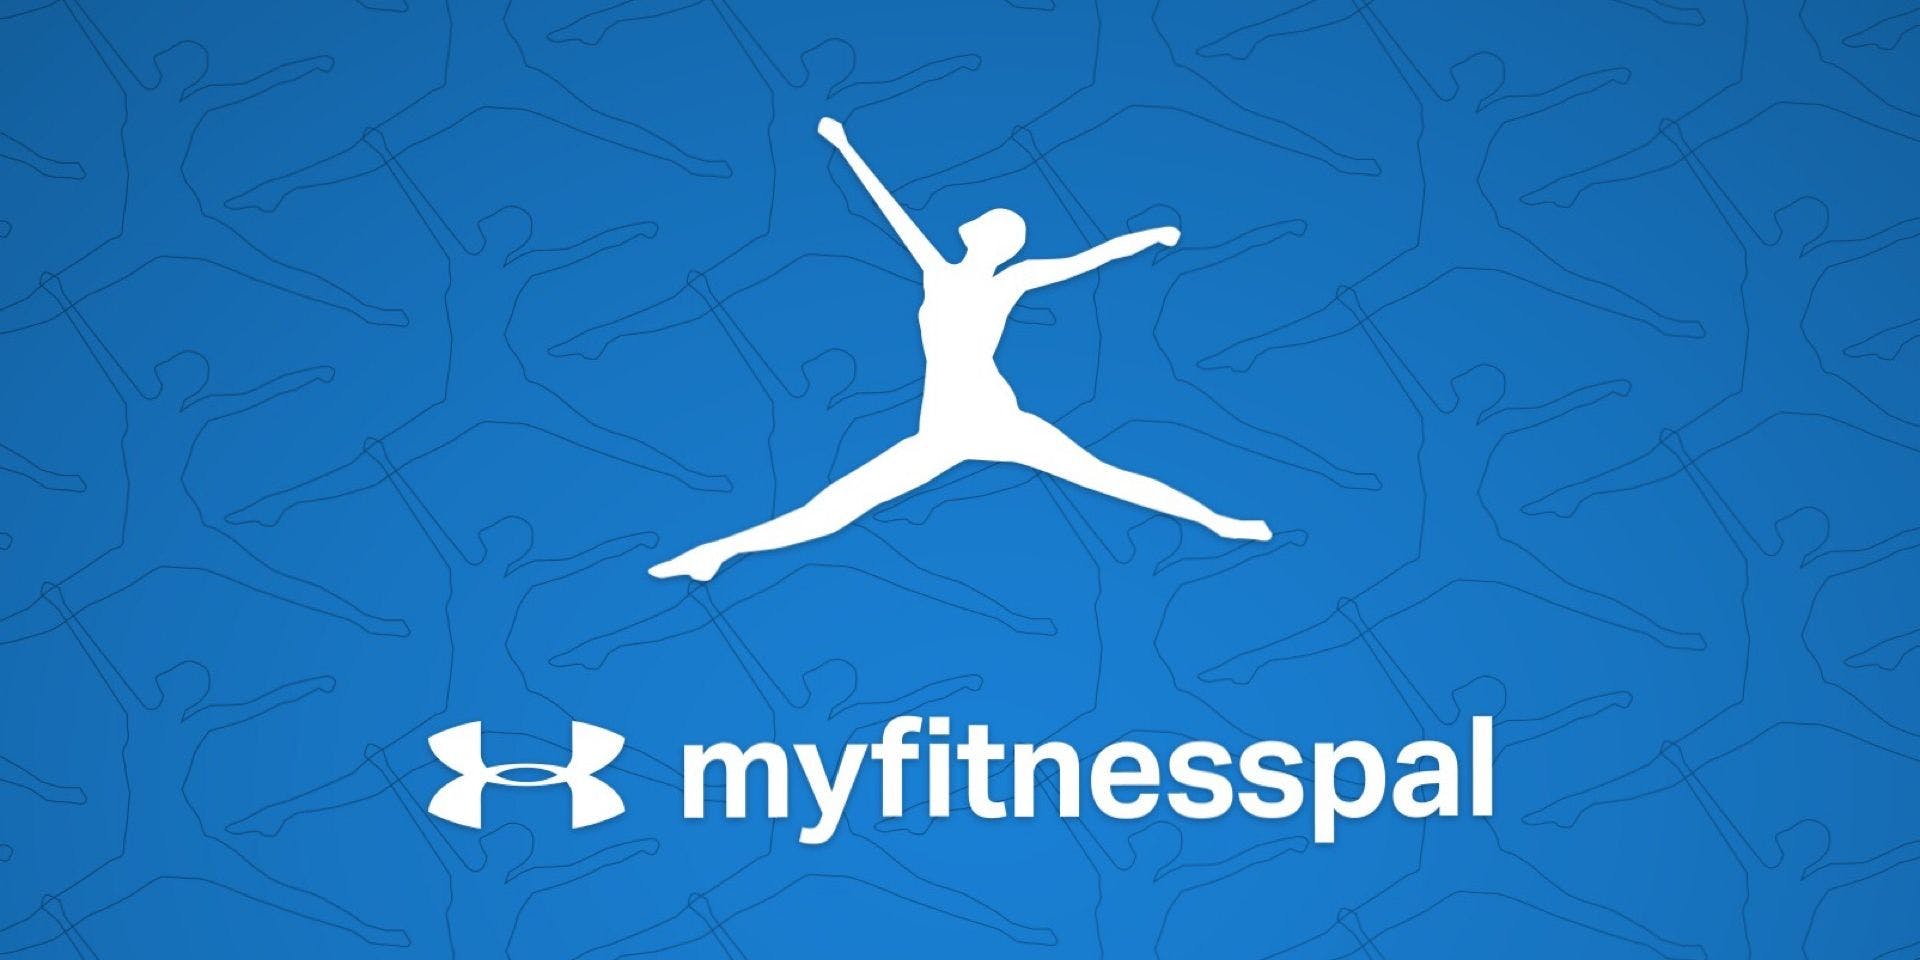 myfitnesspal app logo